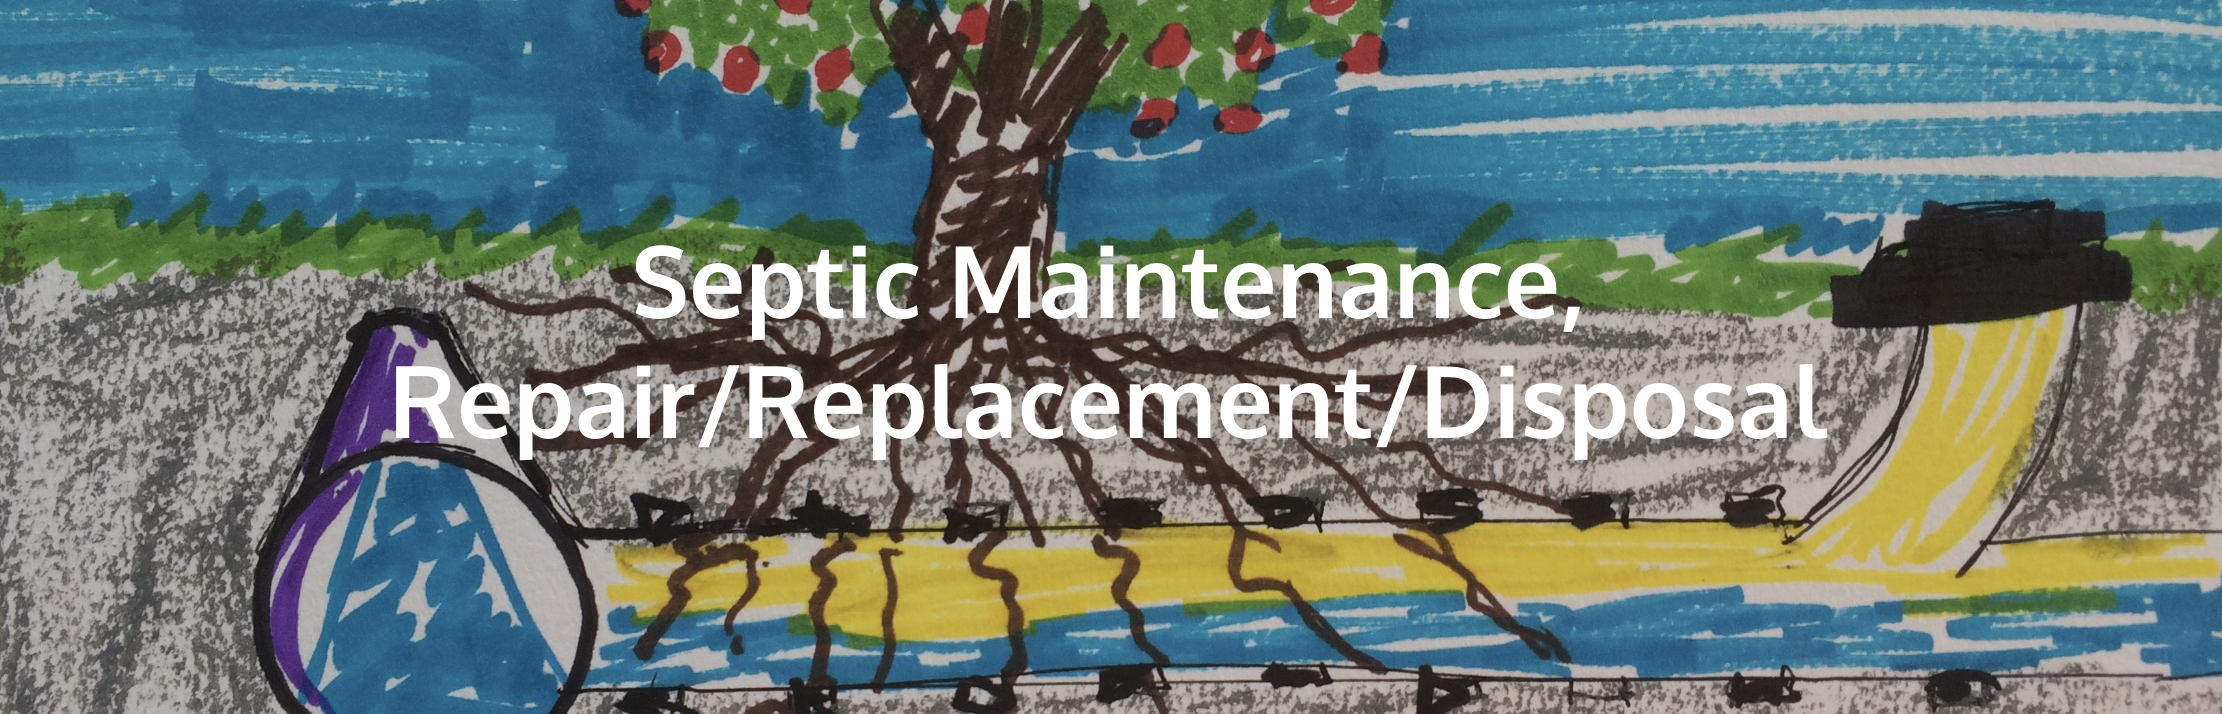 Commercial Septic Maintenance, Repair/Replacement/Disposal